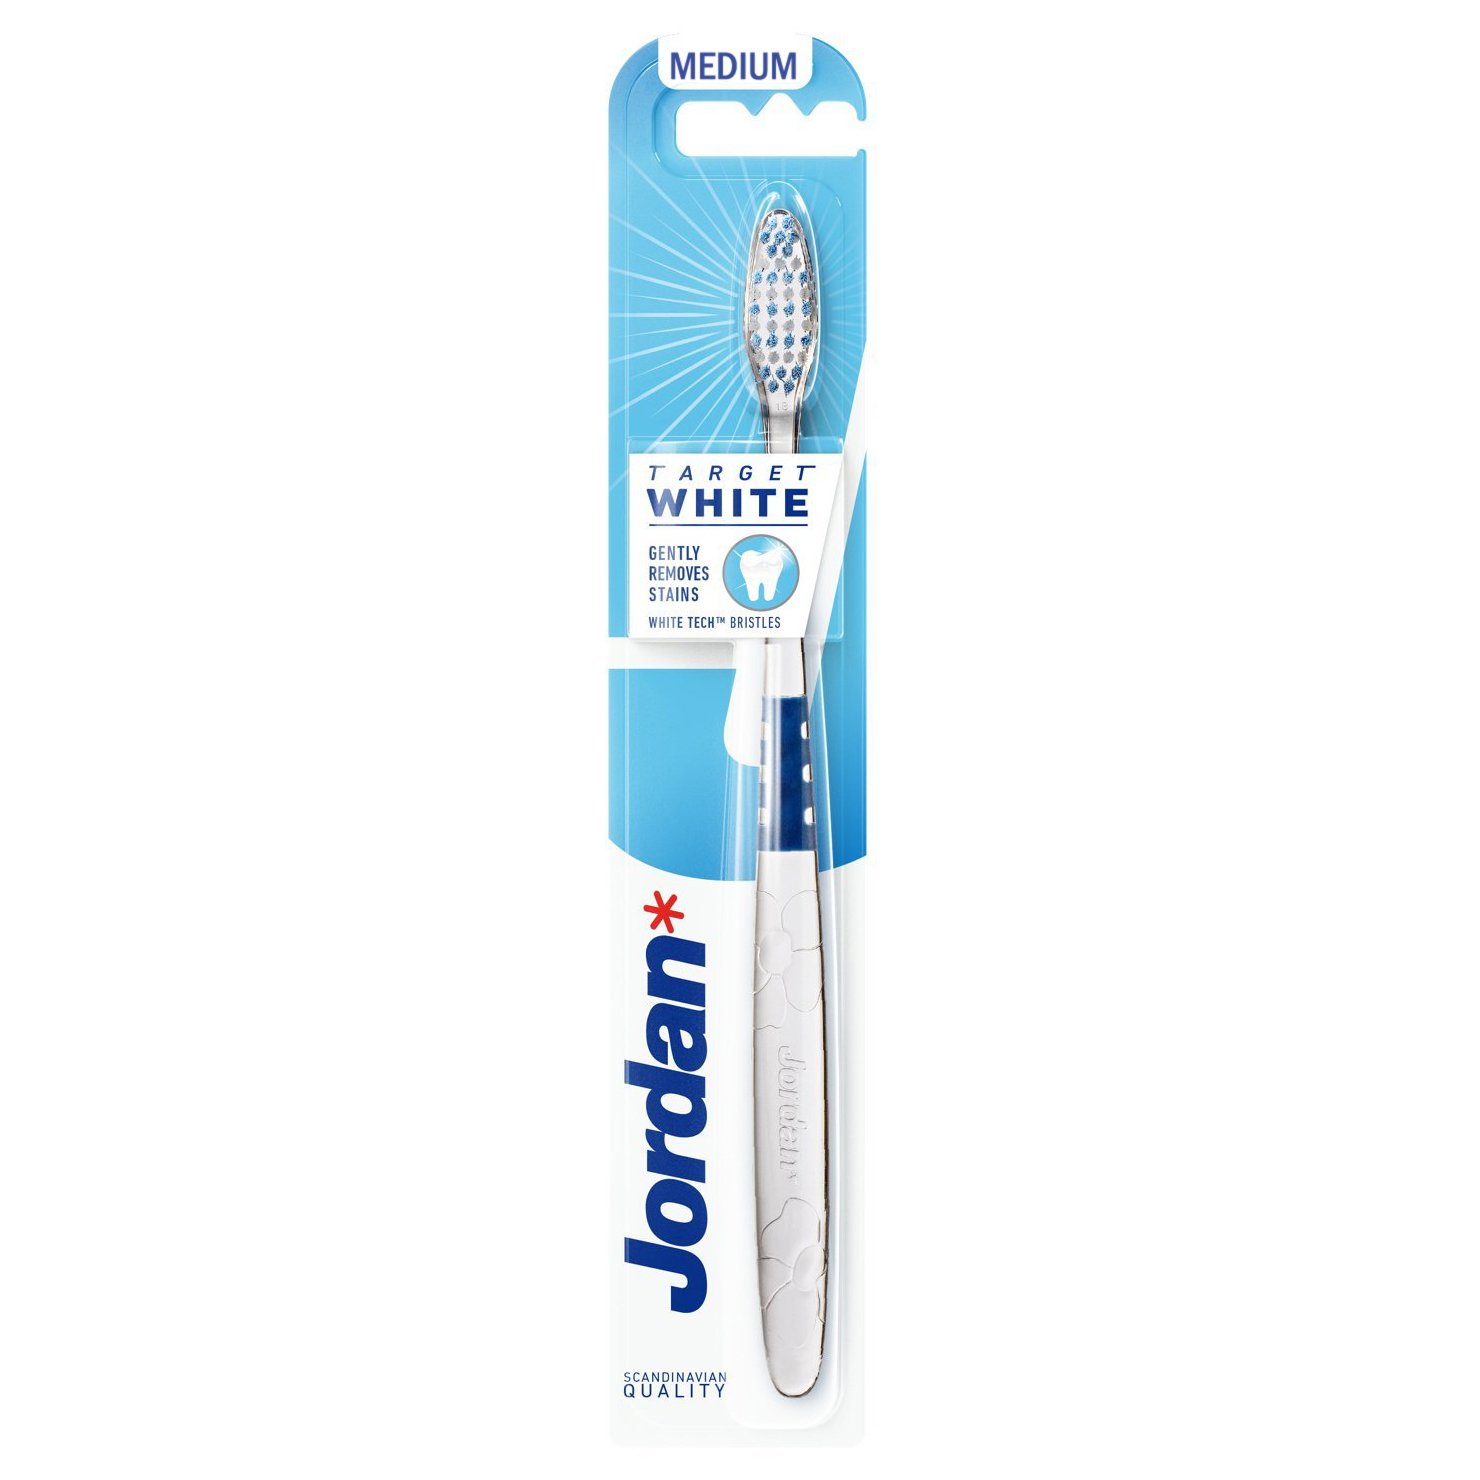 Jordan Target White Toothbrush Medium Μαλακή Οδοντόβουρτσα για Λεύκανση με Ίνες WhiteTech 1 Τεμάχιο – Μπλε